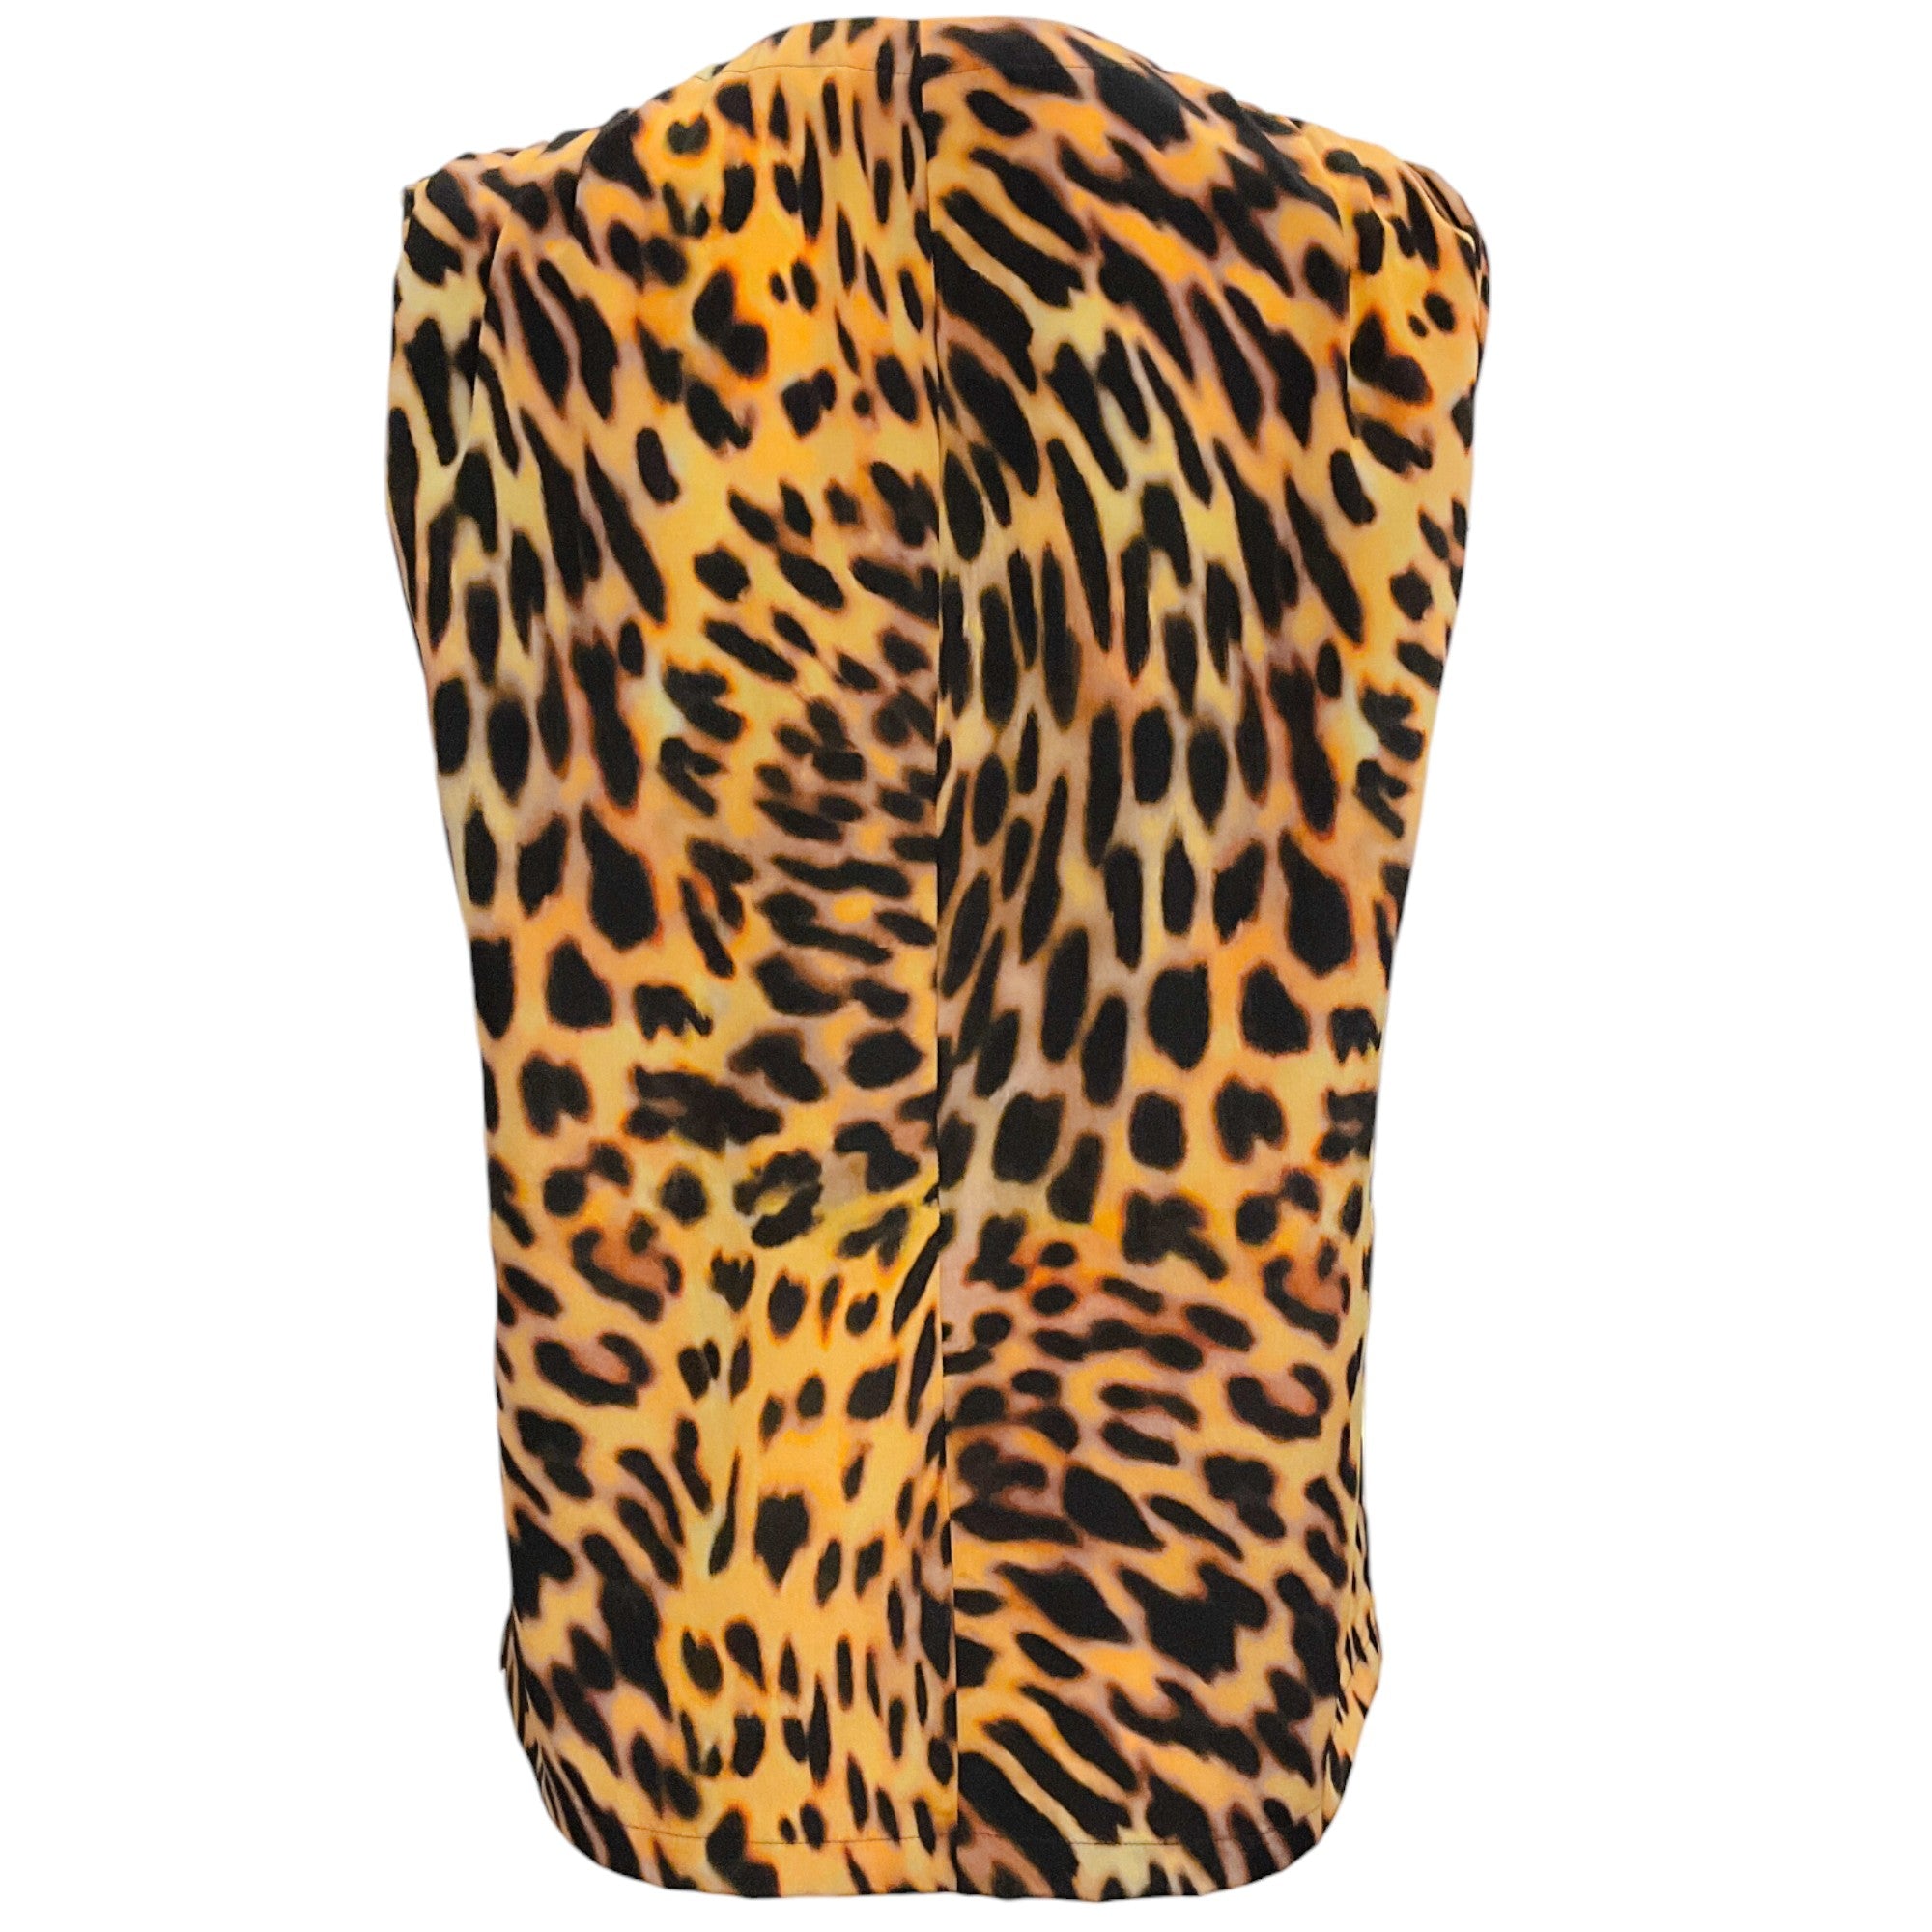 Stella McCartney Leopard Print Silk Sleeveless Top with Tie